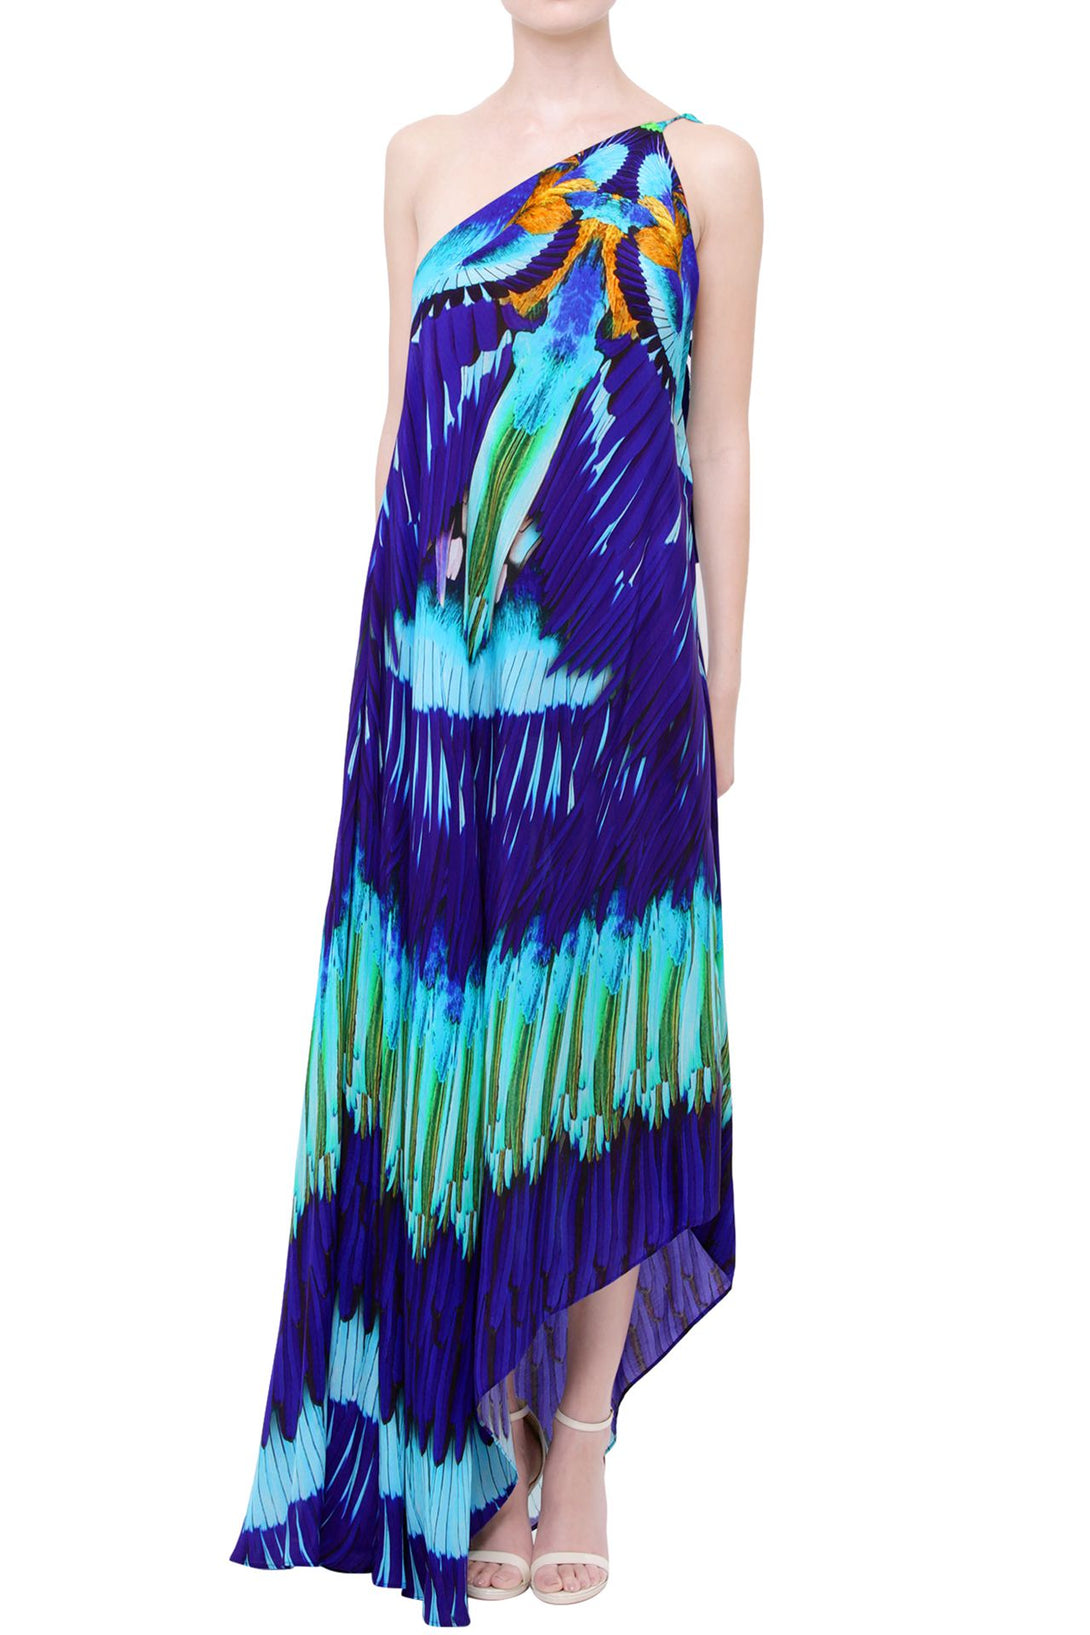  blue maxi dress, long summer dresses for women, plunge neck cocktail dress, Shahida Parides,